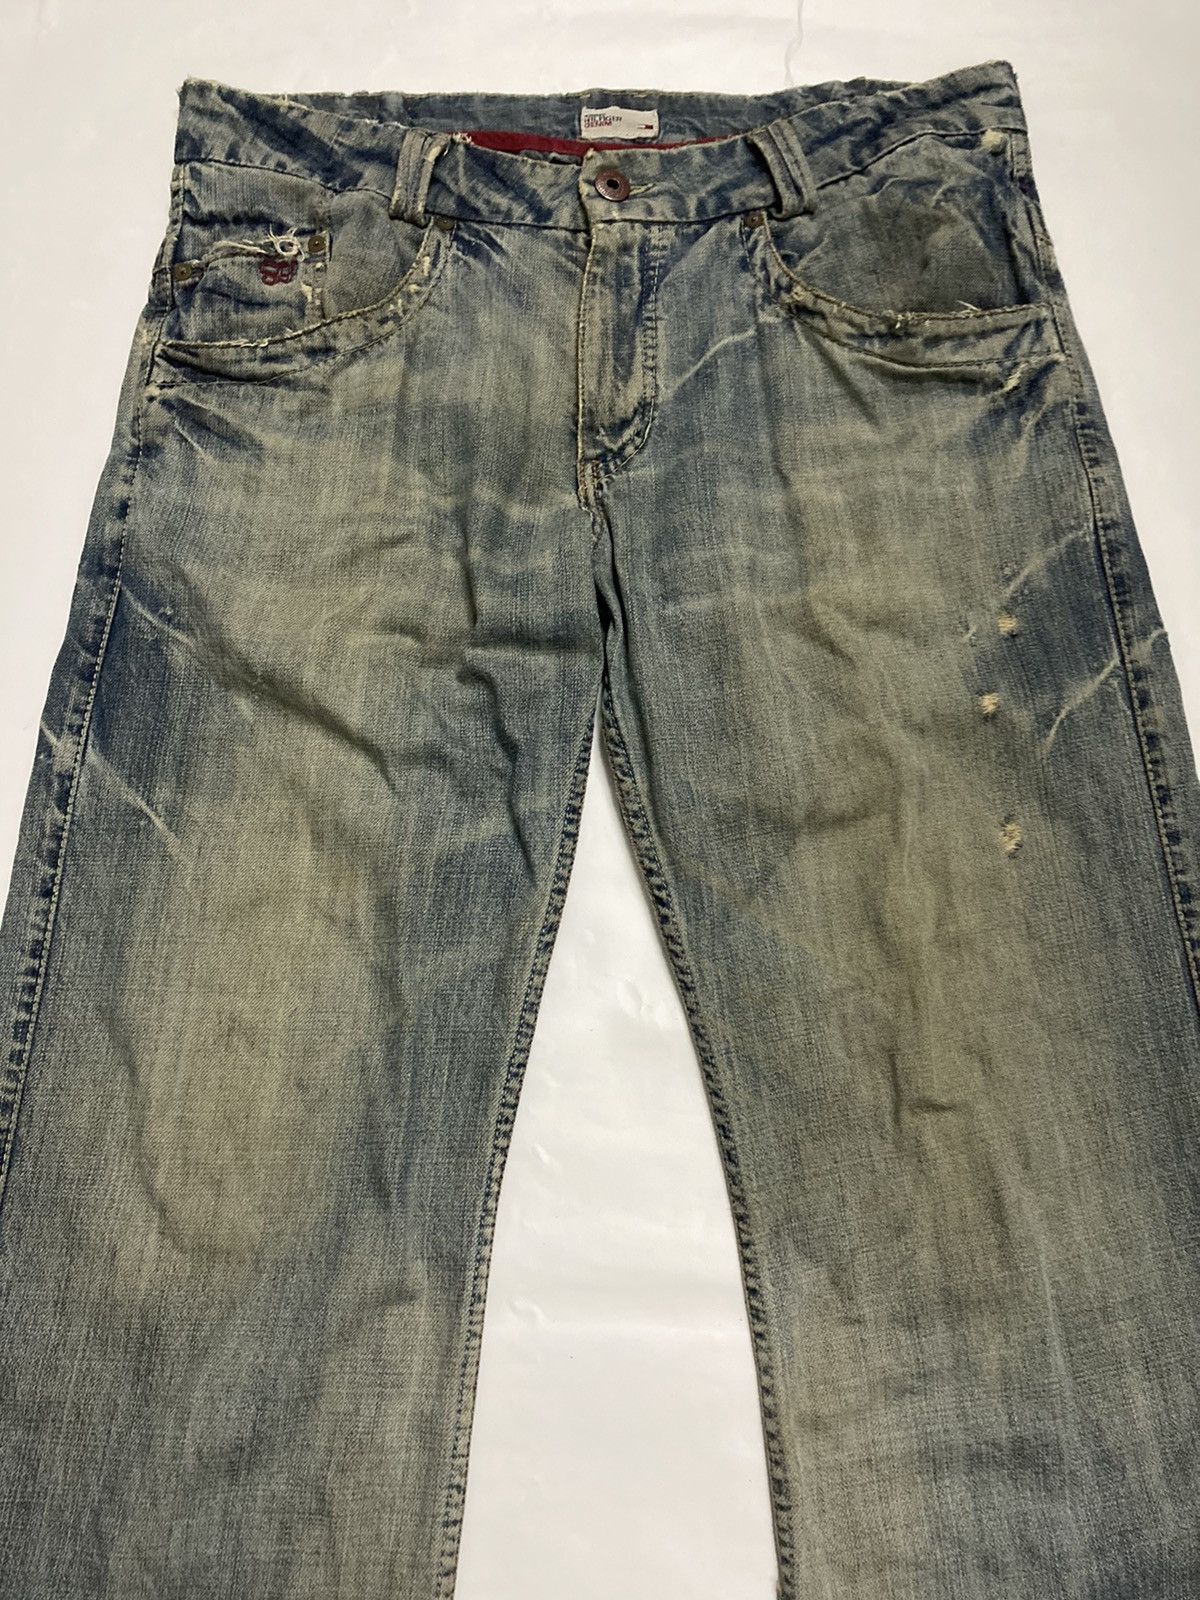 Tommy Hilfiger Denim Distressed Jeans - 5